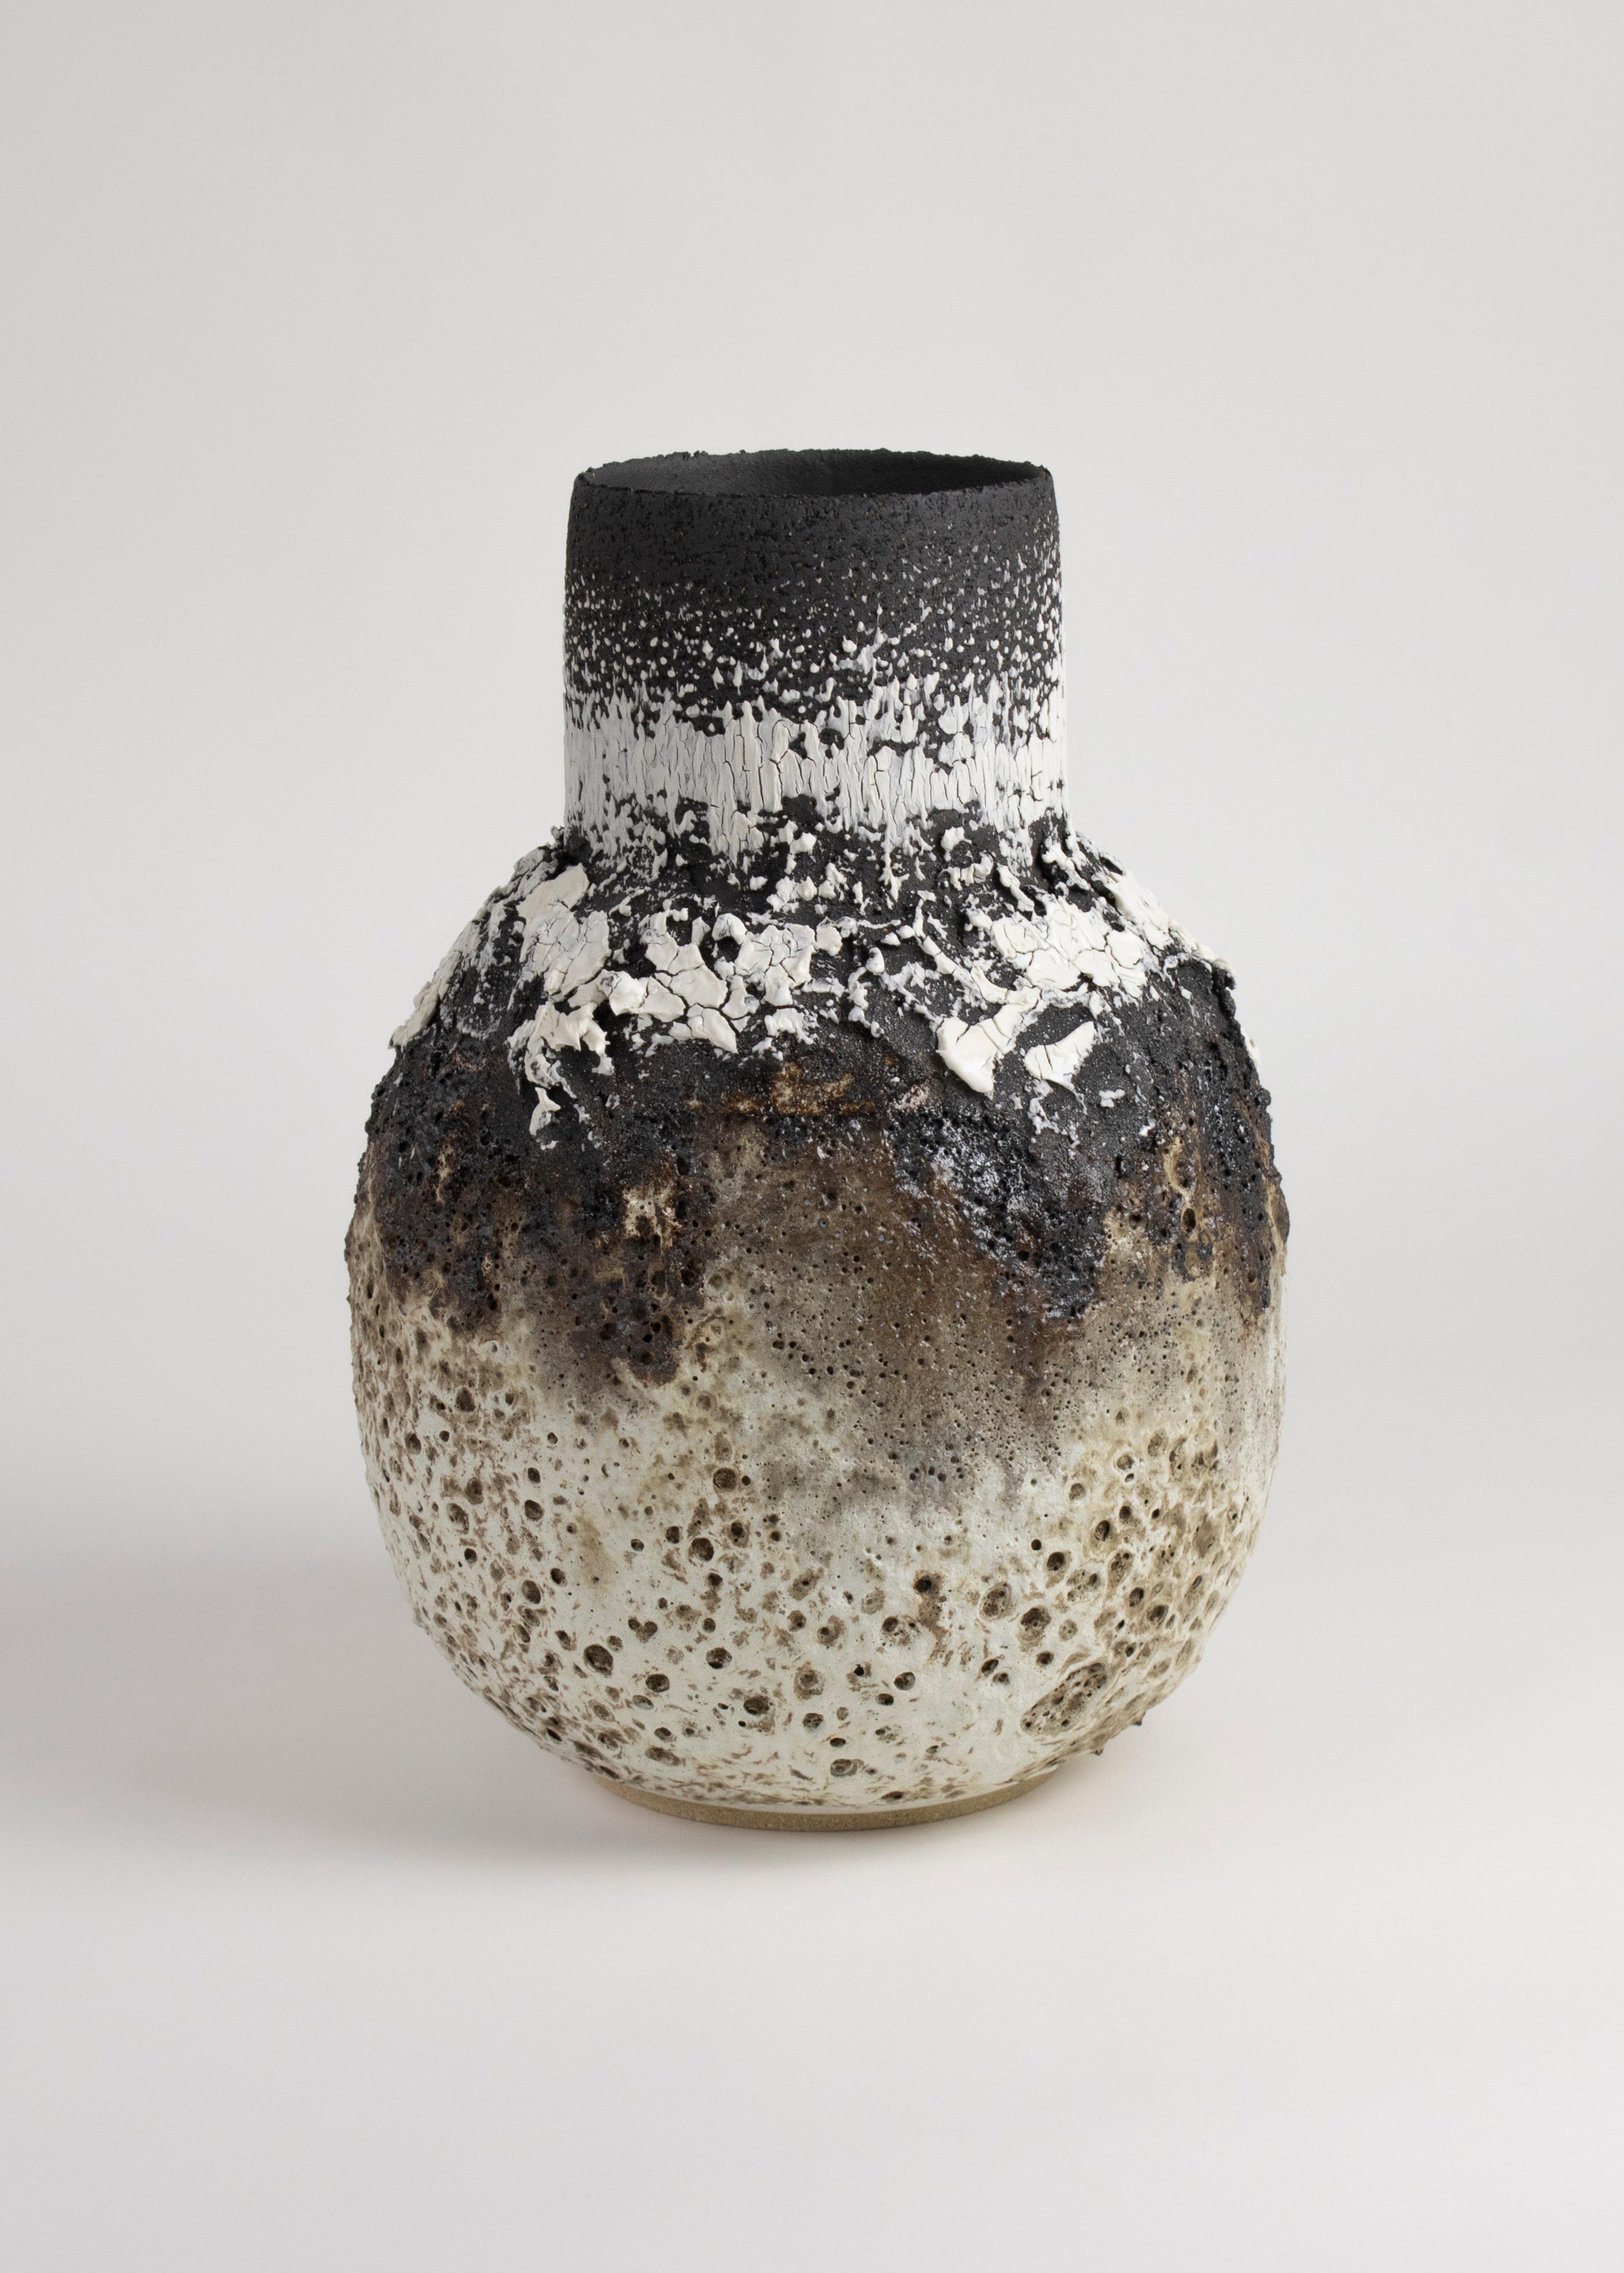 British Black, White & Mocha Large Heavily Textured Stoneware, Porcelain Volcanic Vessel For Sale